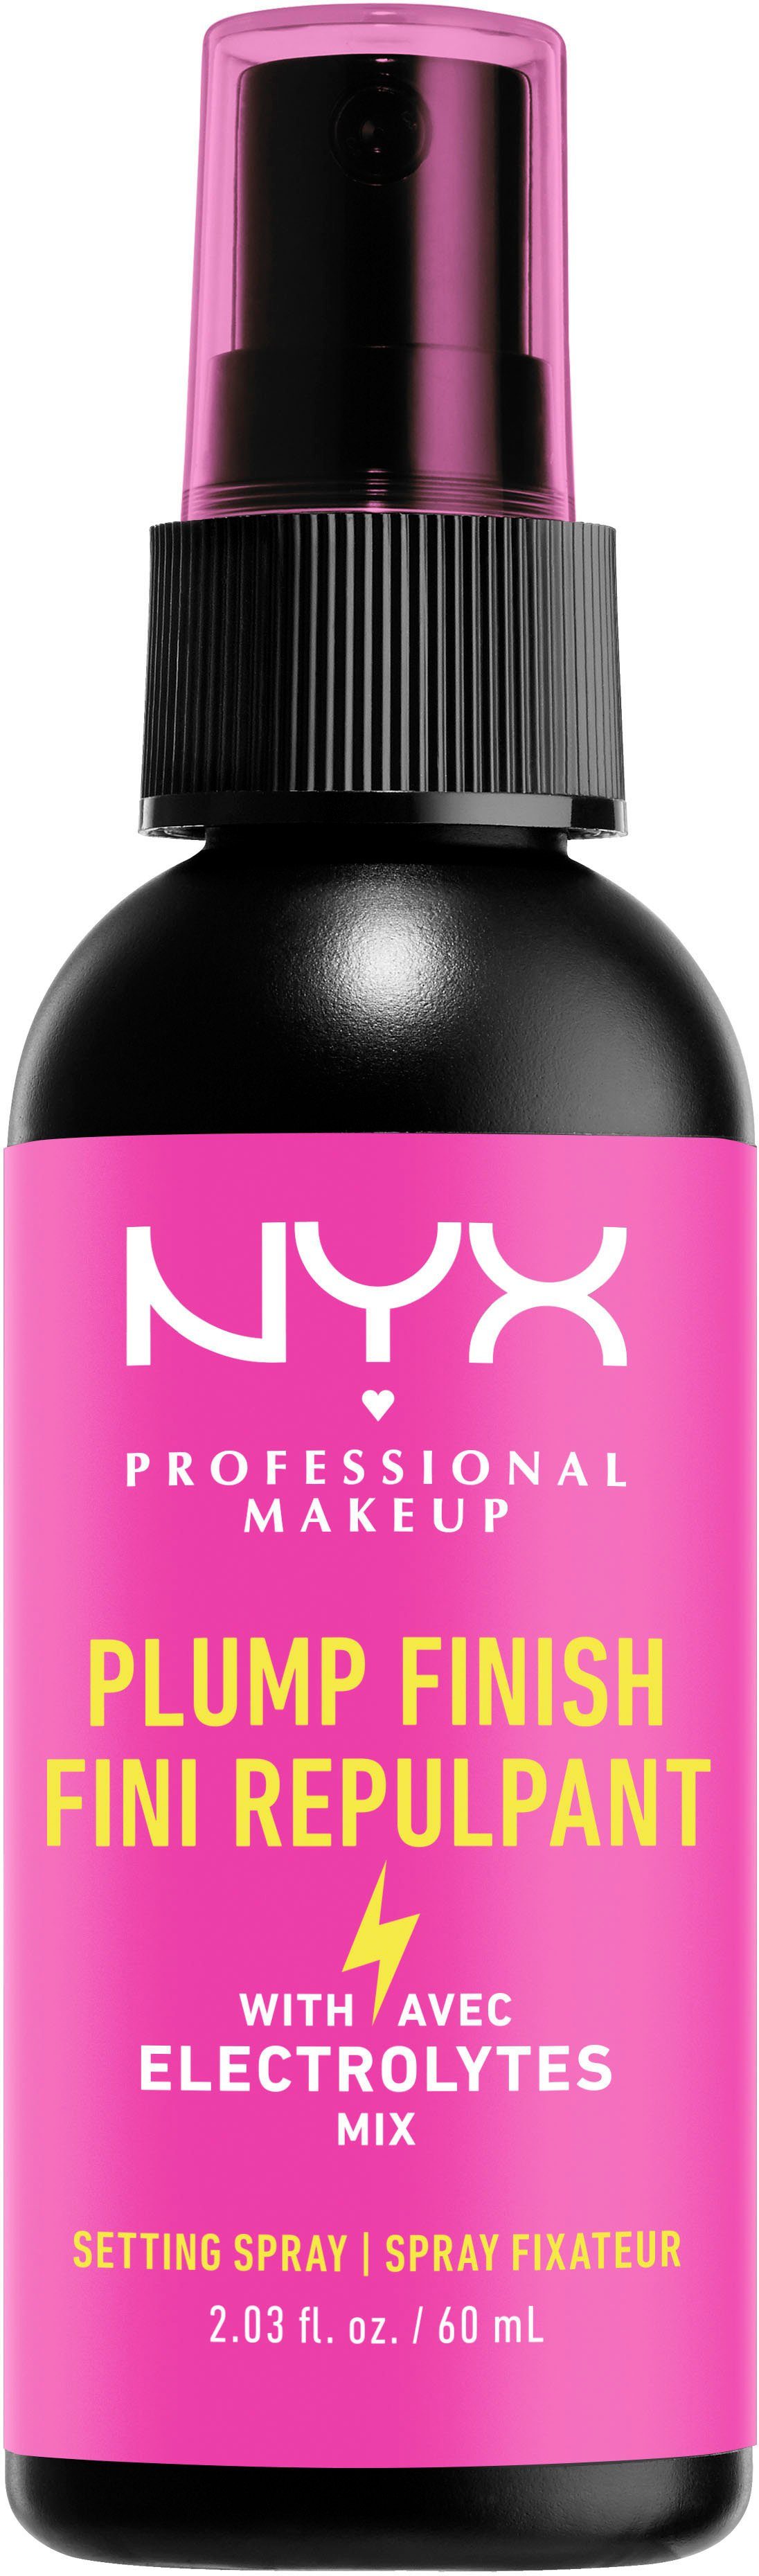 NYX Gesichtsspray Professional Makeup Plump Setting mit Spray, Finish Hyaluron